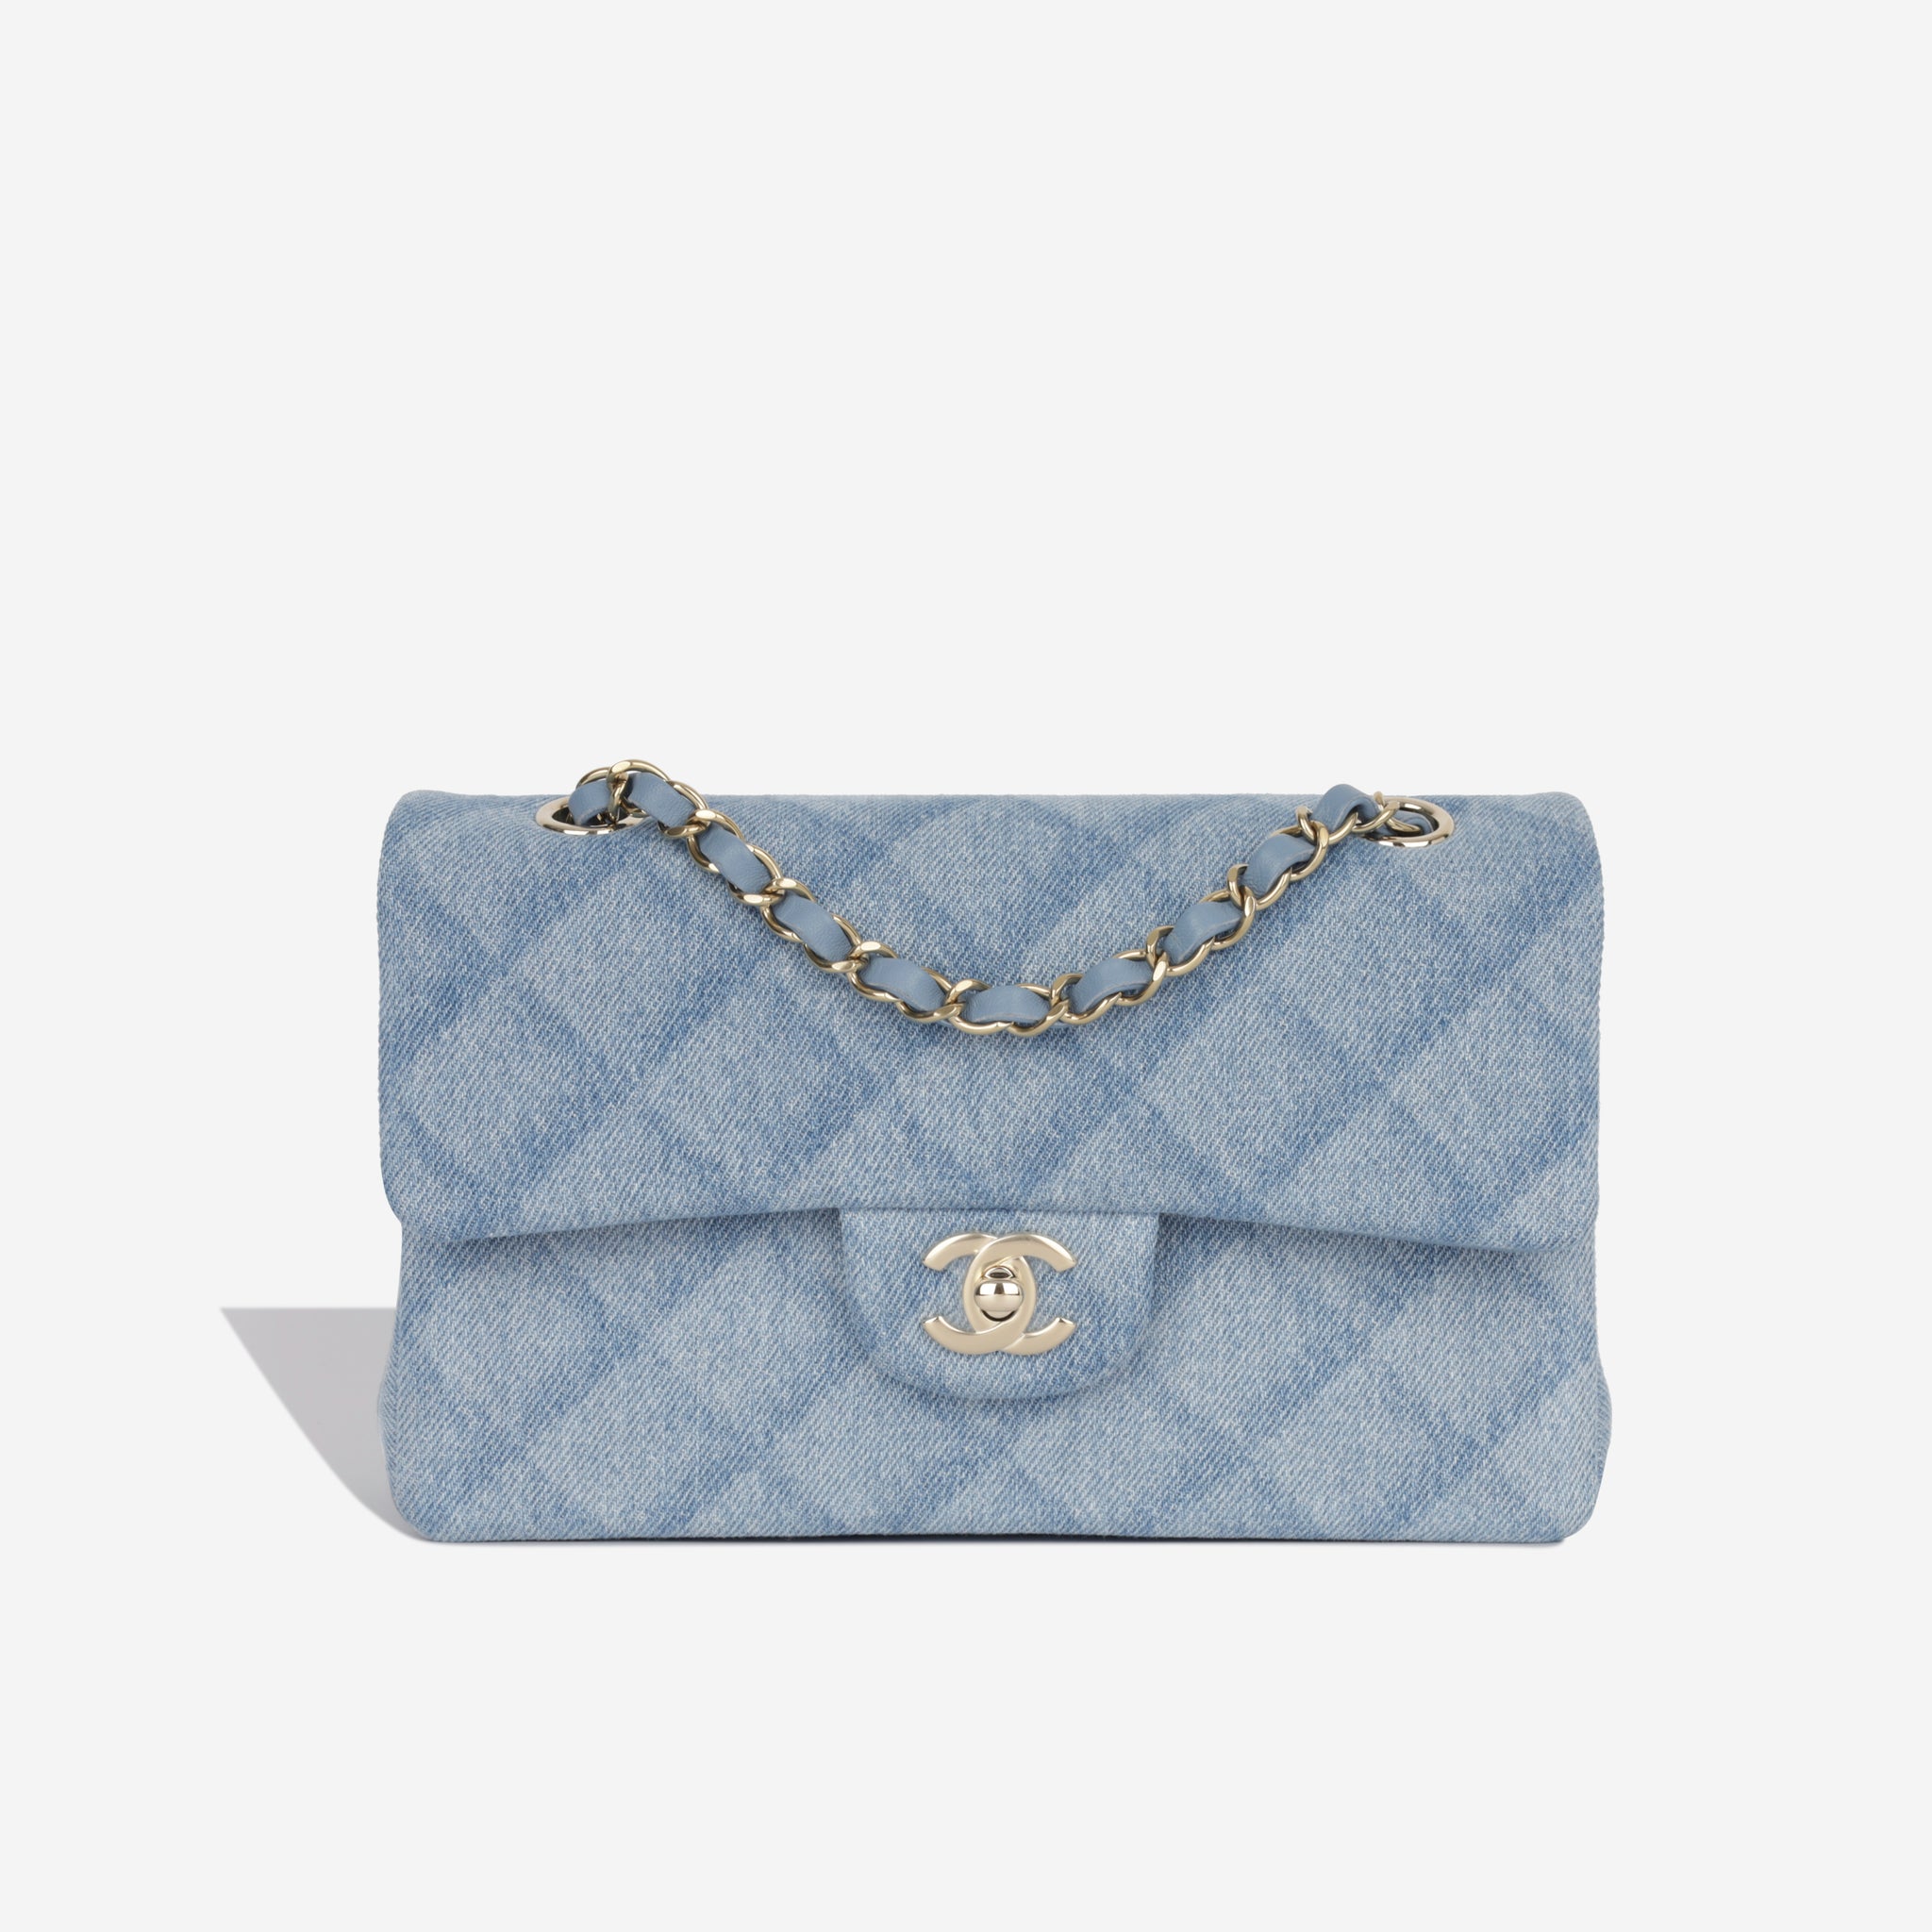 Chanel  Small Classic Flap Bag  Blue Denim CGHW  Brand New  Bagista